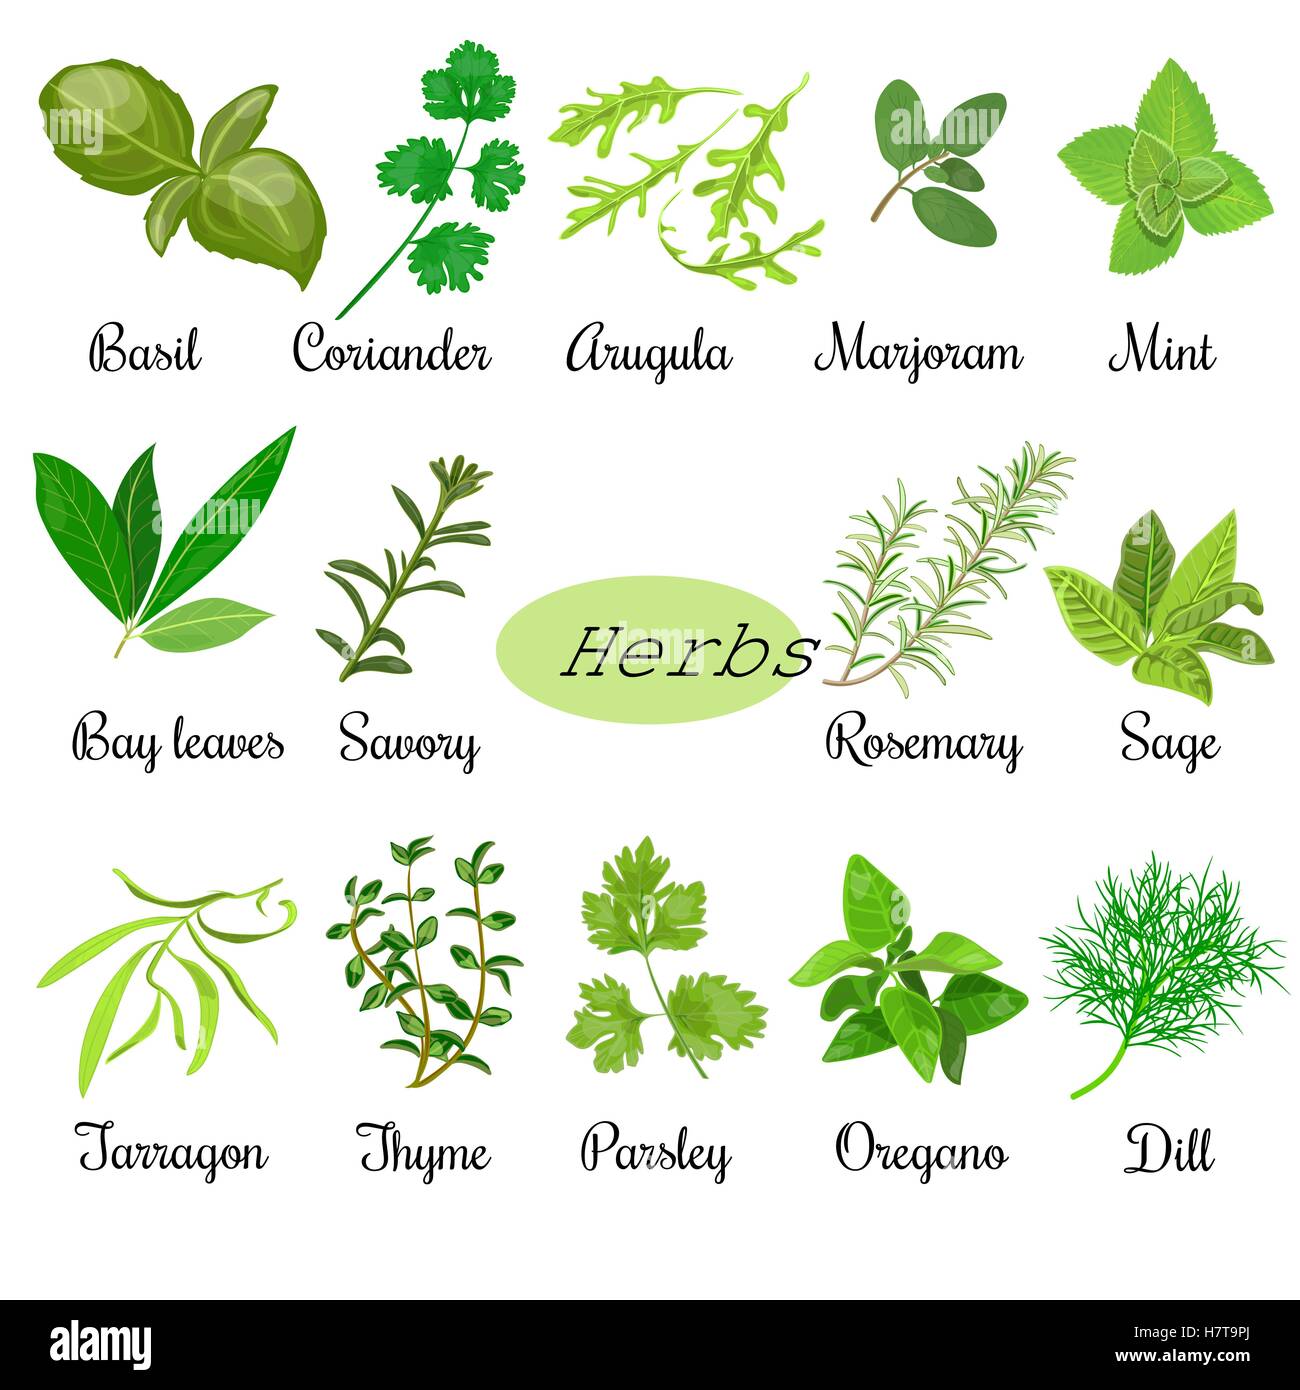 https://c8.alamy.com/comp/H7T9PJ/big-set-of-fresh-culinary-herbs-H7T9PJ.jpg